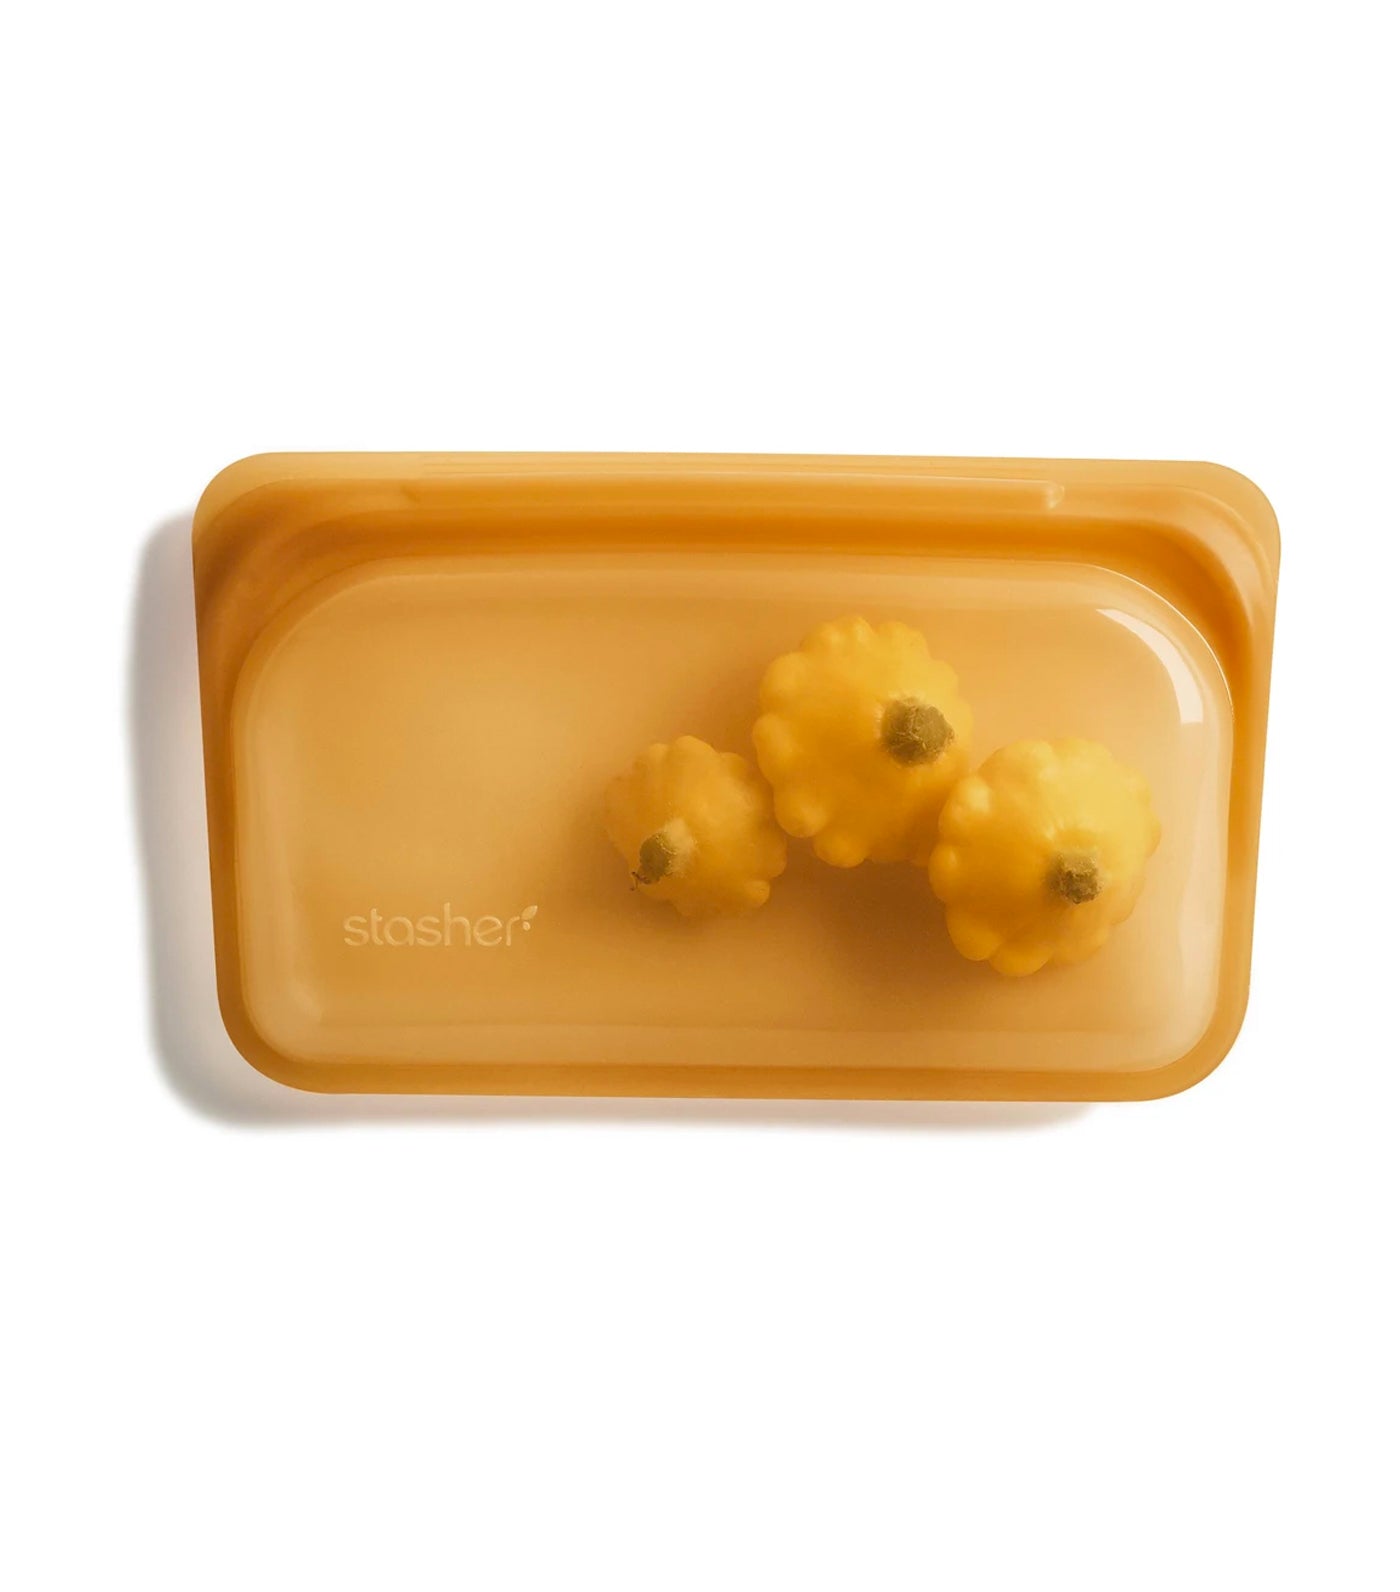 Stasher Reusable Silicone Snack Bag - Honey